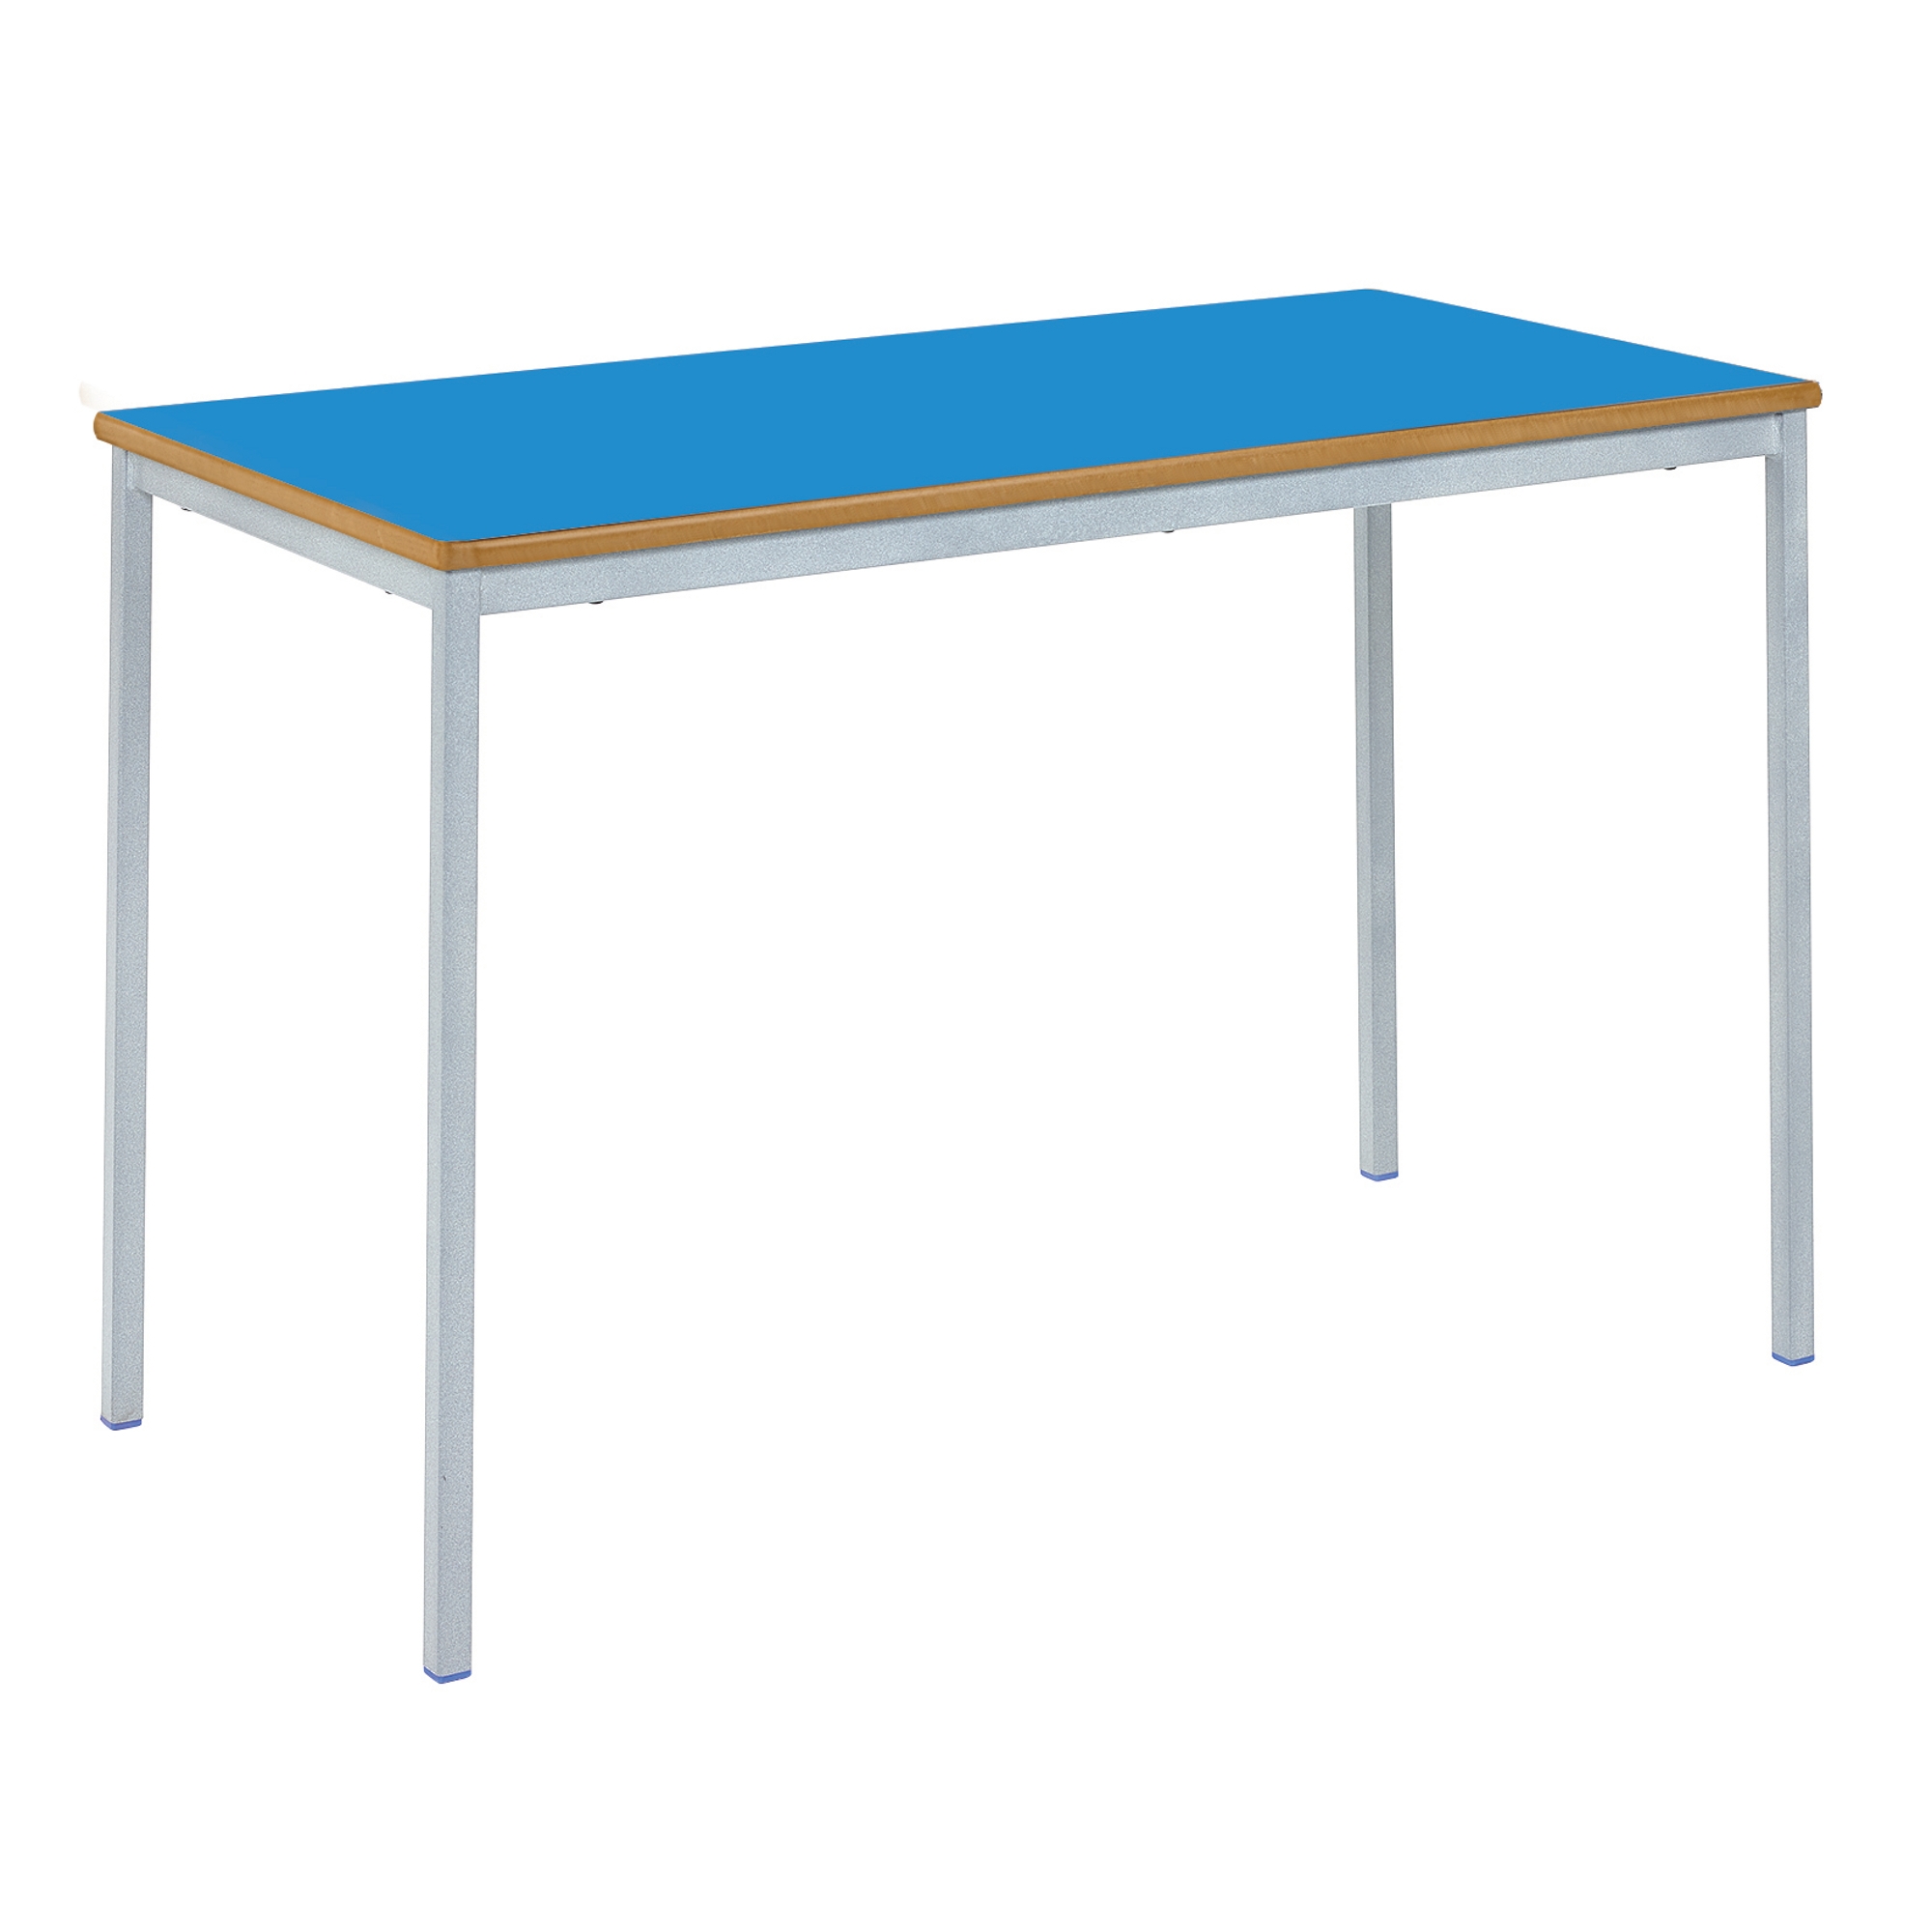 Classmates Rectangular Fully Welded Classroom Table - 1100 x 550 x 590mm - Blue